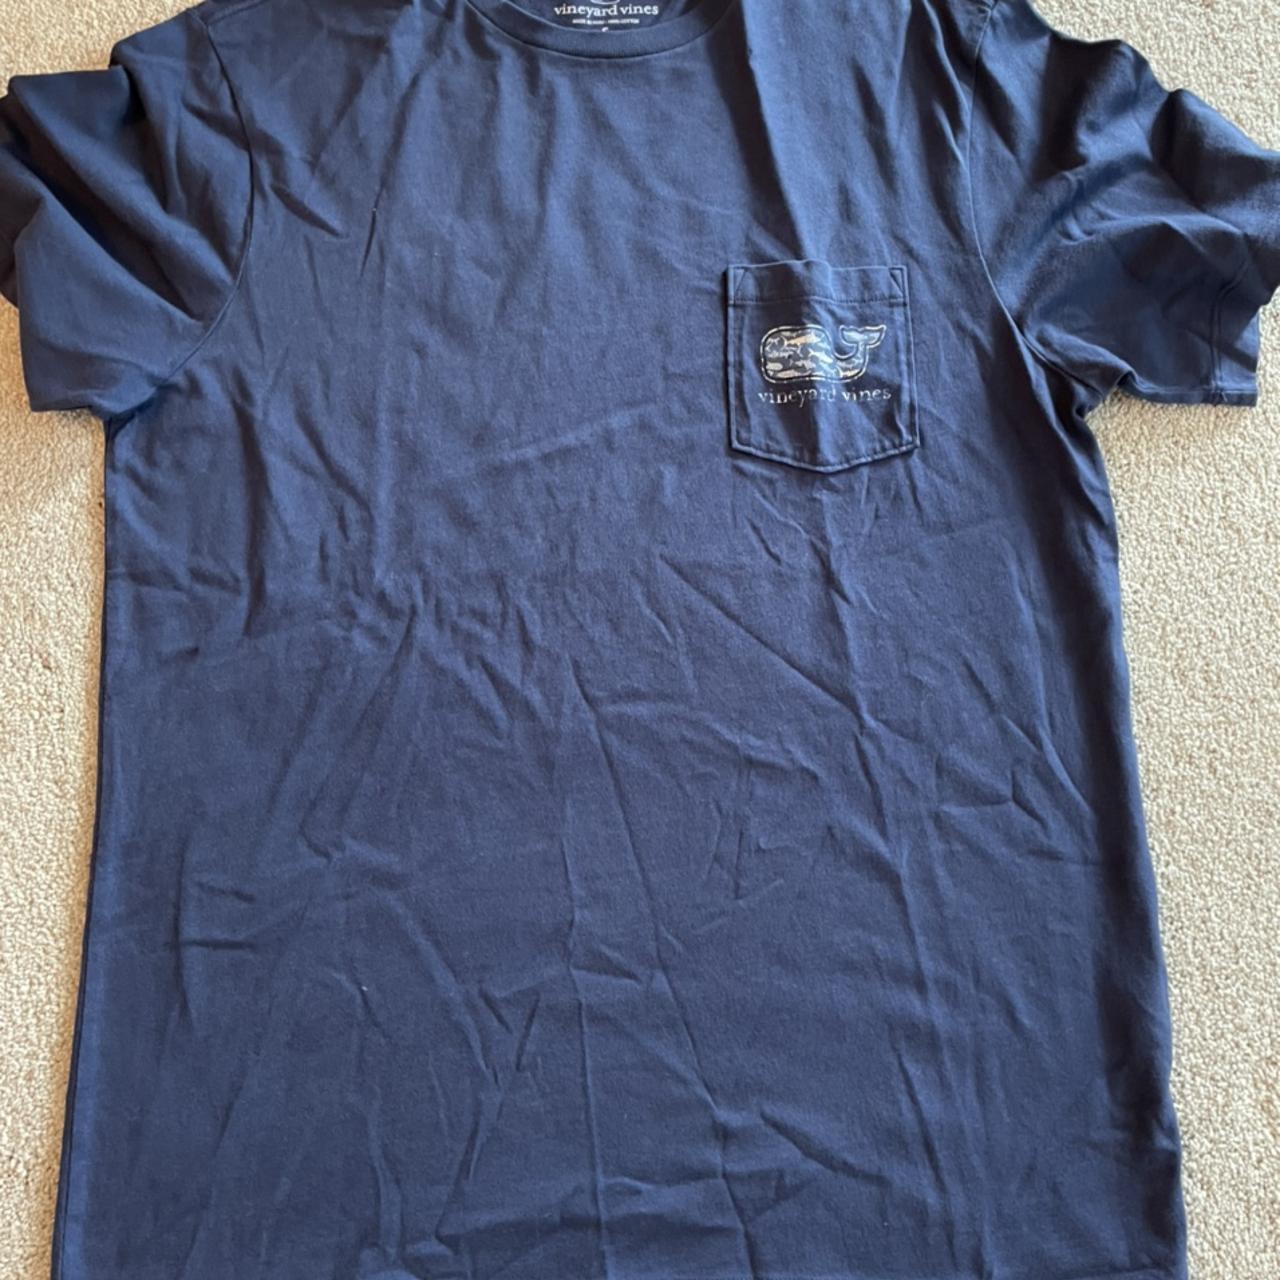 Vineyard Vines Men's Blue and Navy T-shirt | Depop